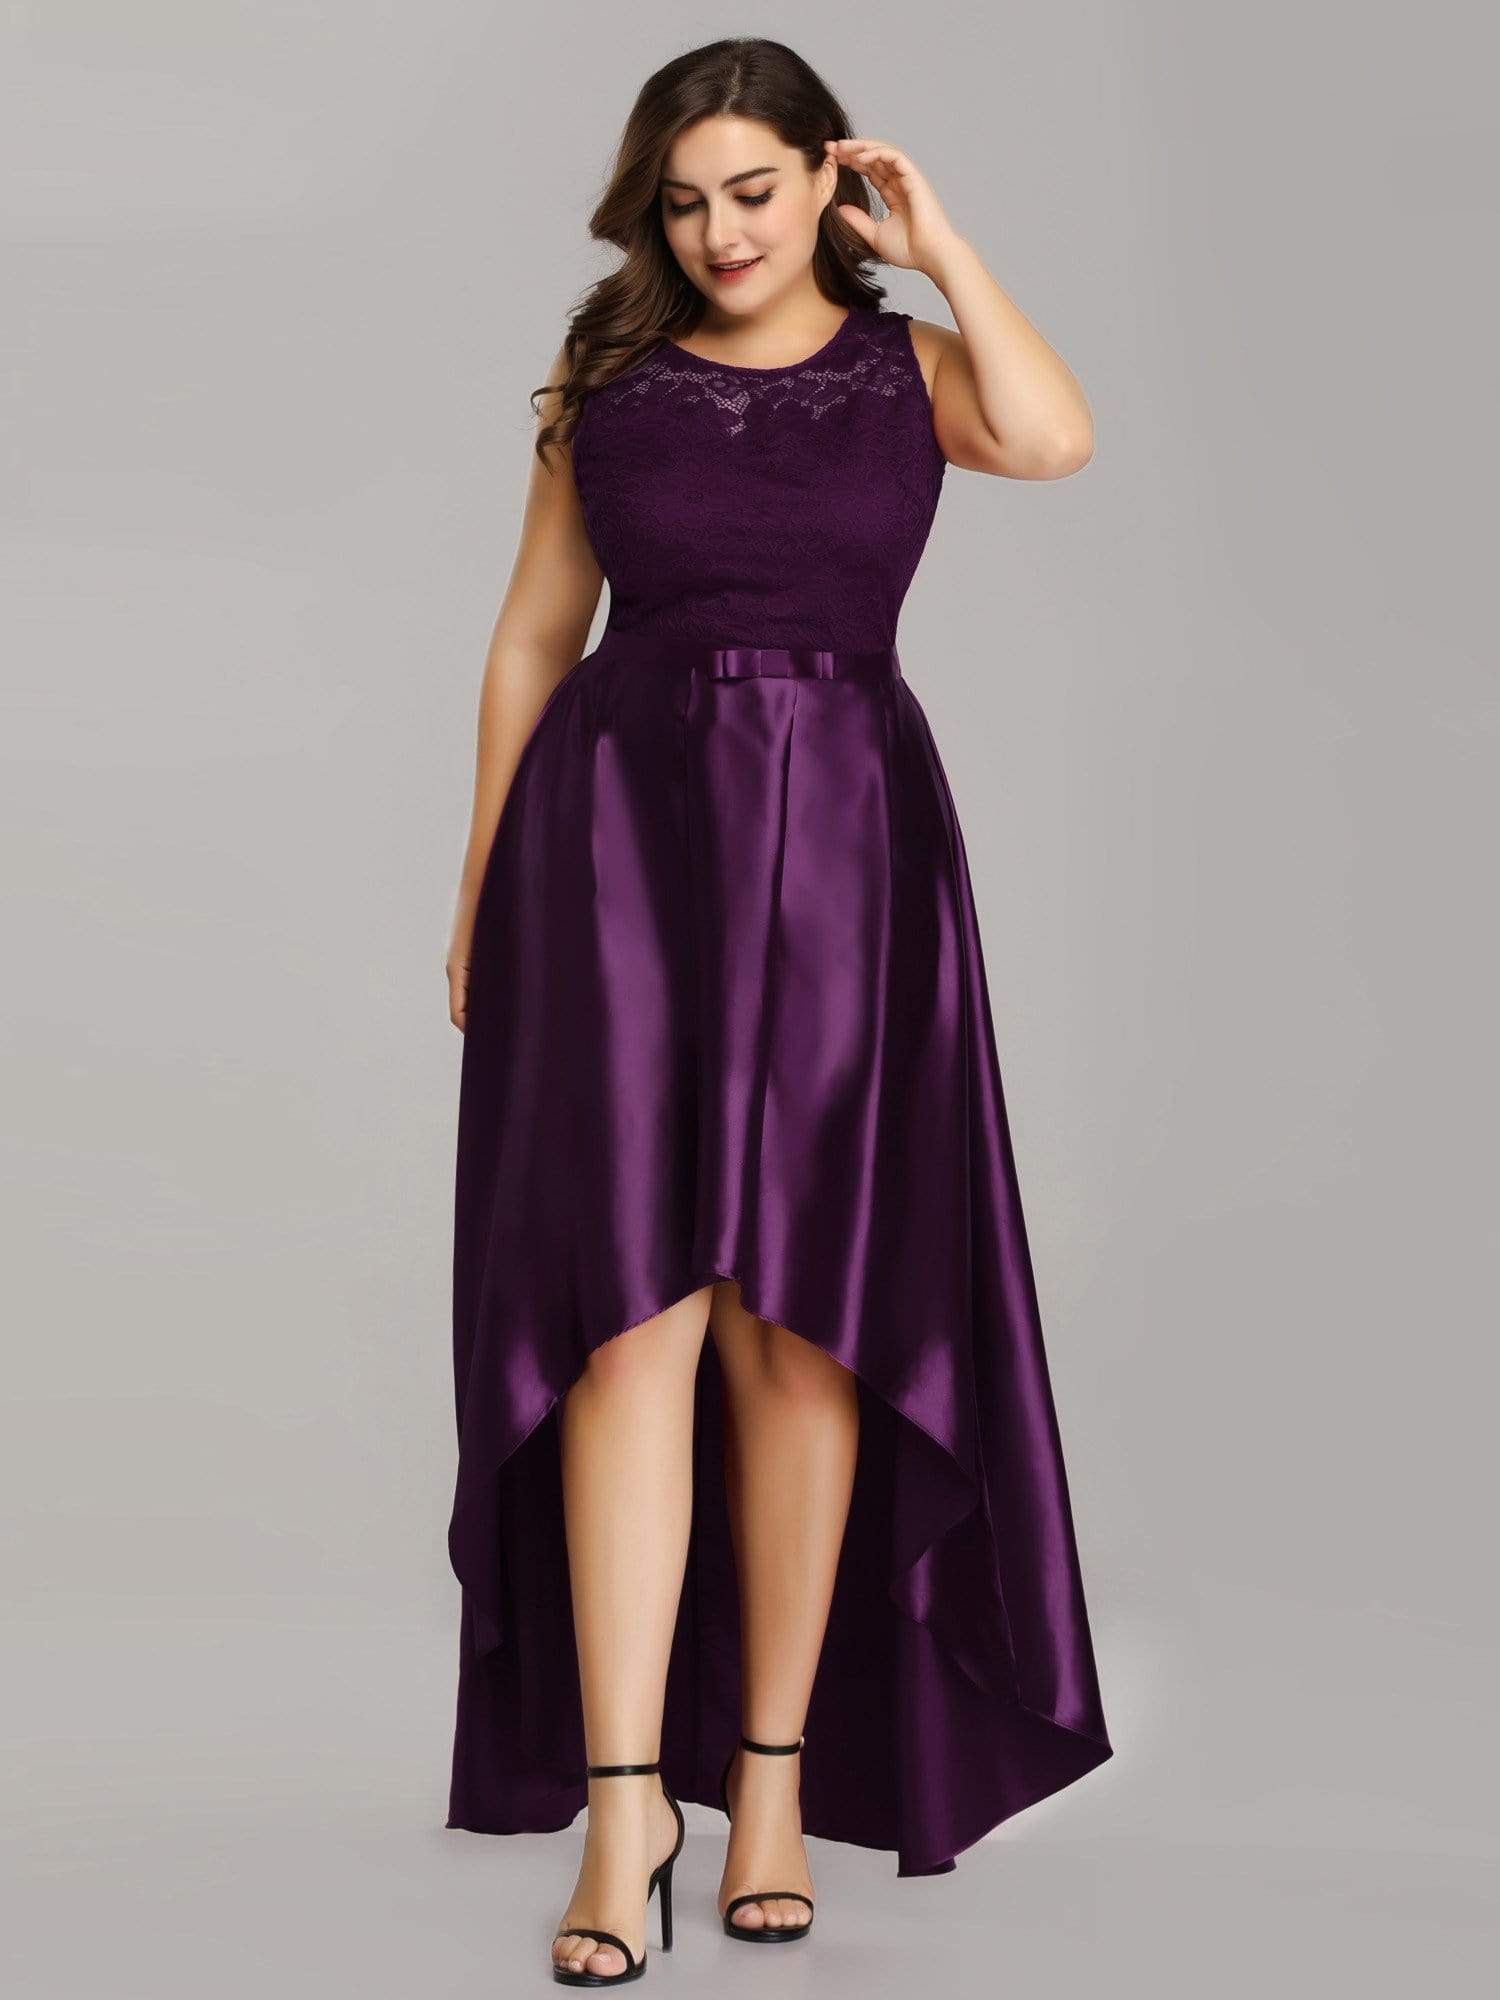 Plus Size High Low Lace & Satin Party Dress